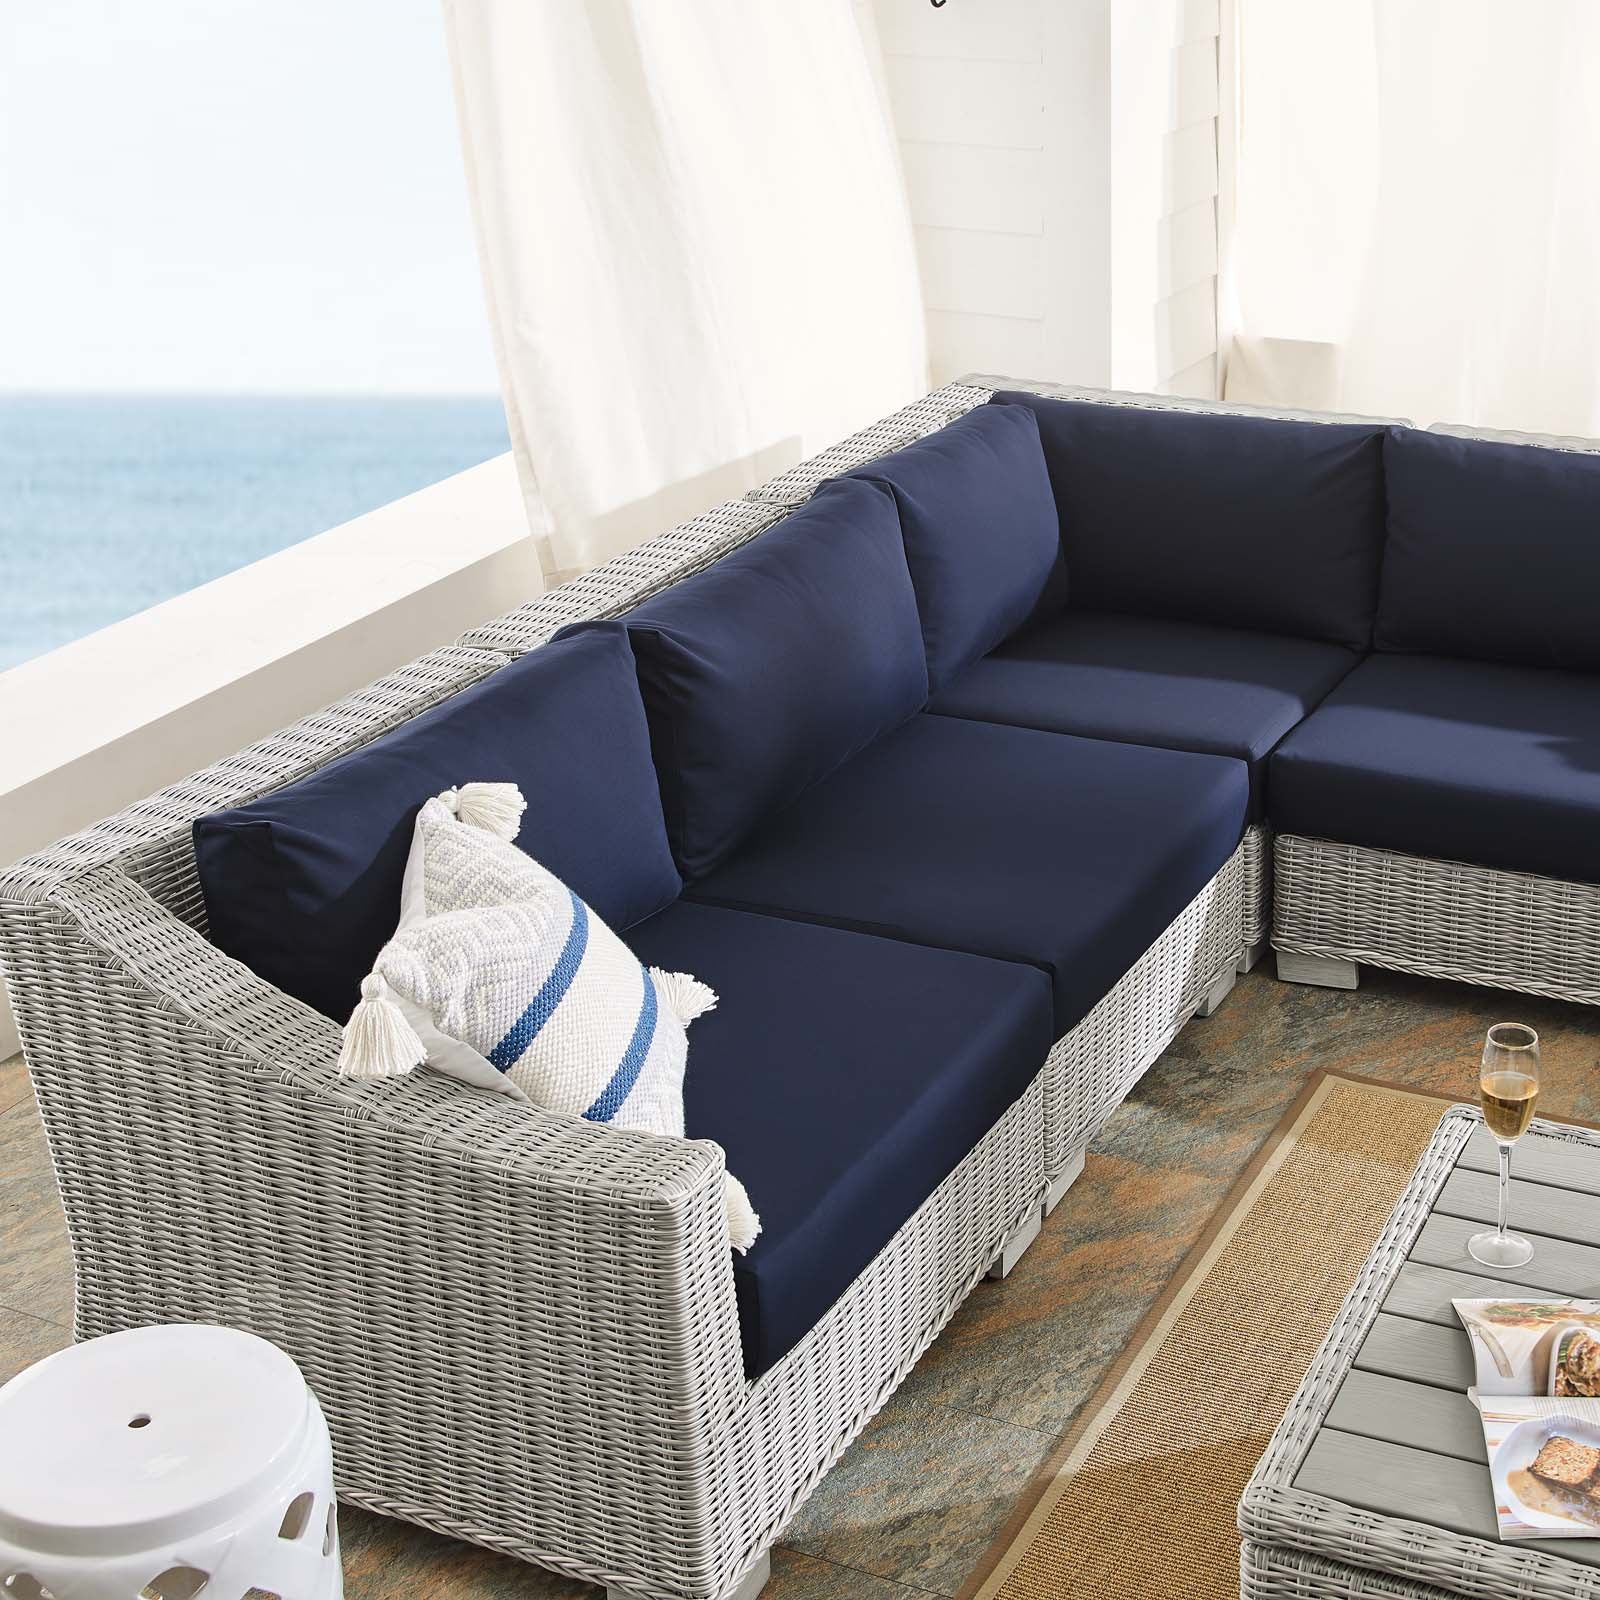 Conway Sunbrella® Outdoor Patio Wicker Rattan 9-Piece Sectional Sofa Set - East Shore Modern Home Furnishings